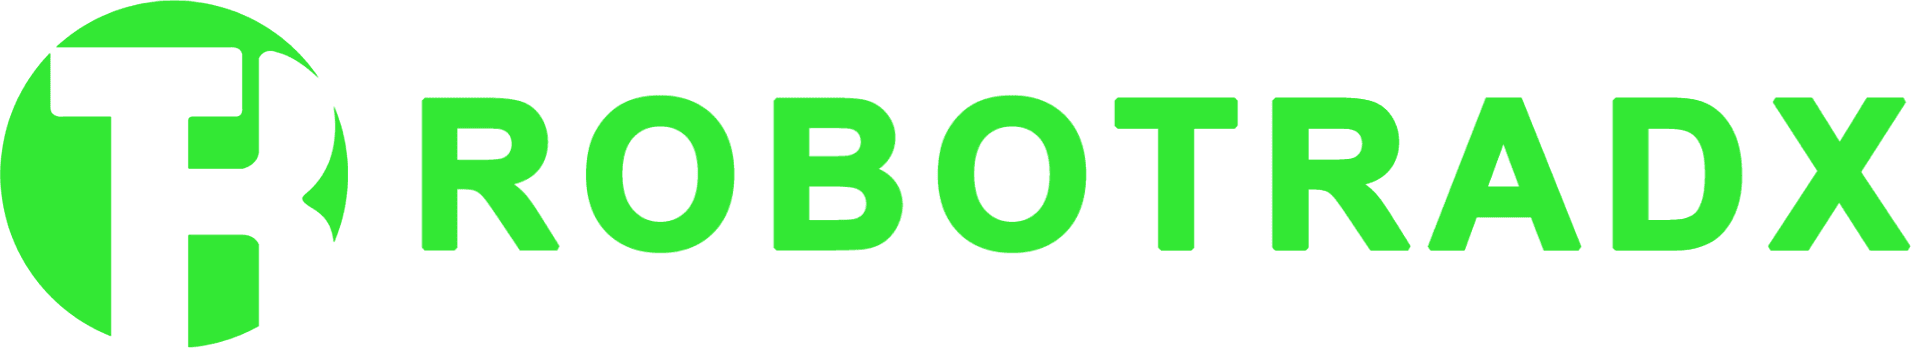 Robotradx